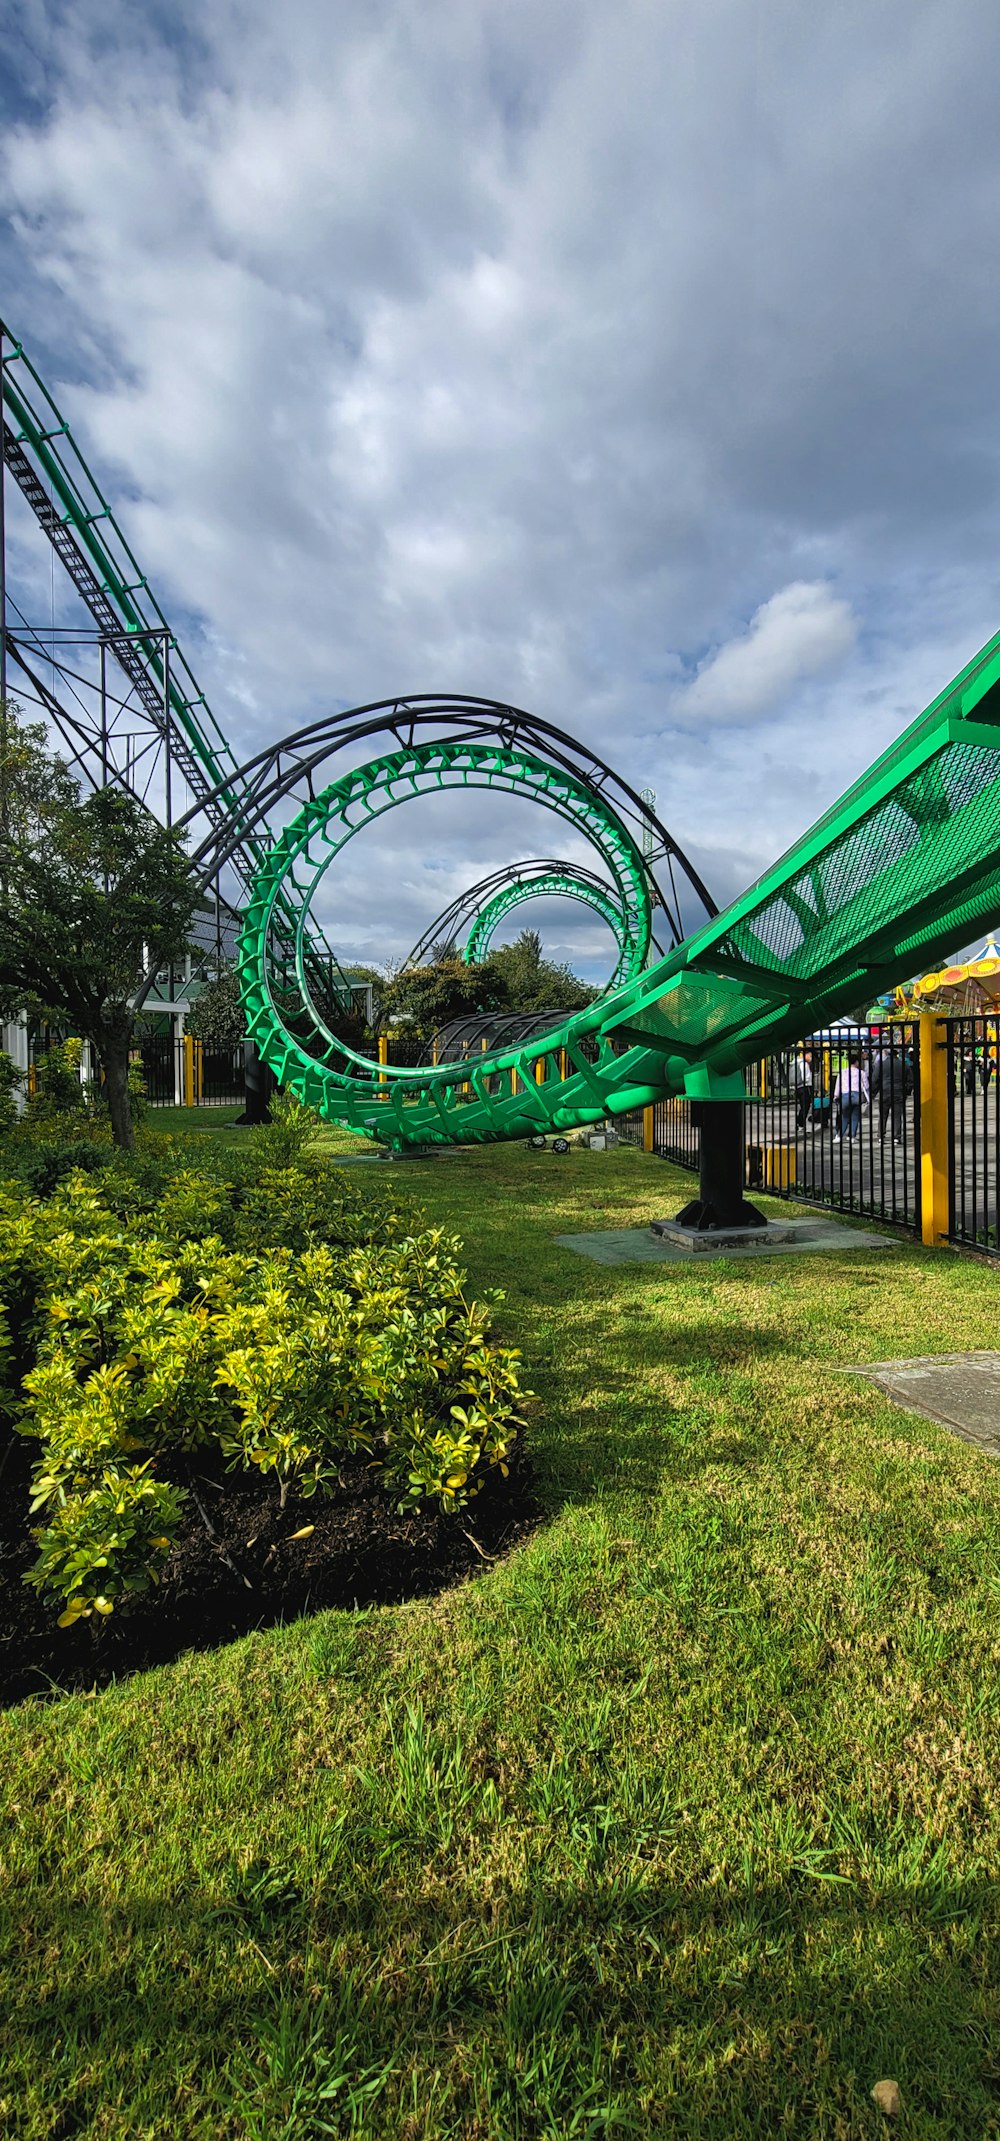 a green roller coaster going down a hill